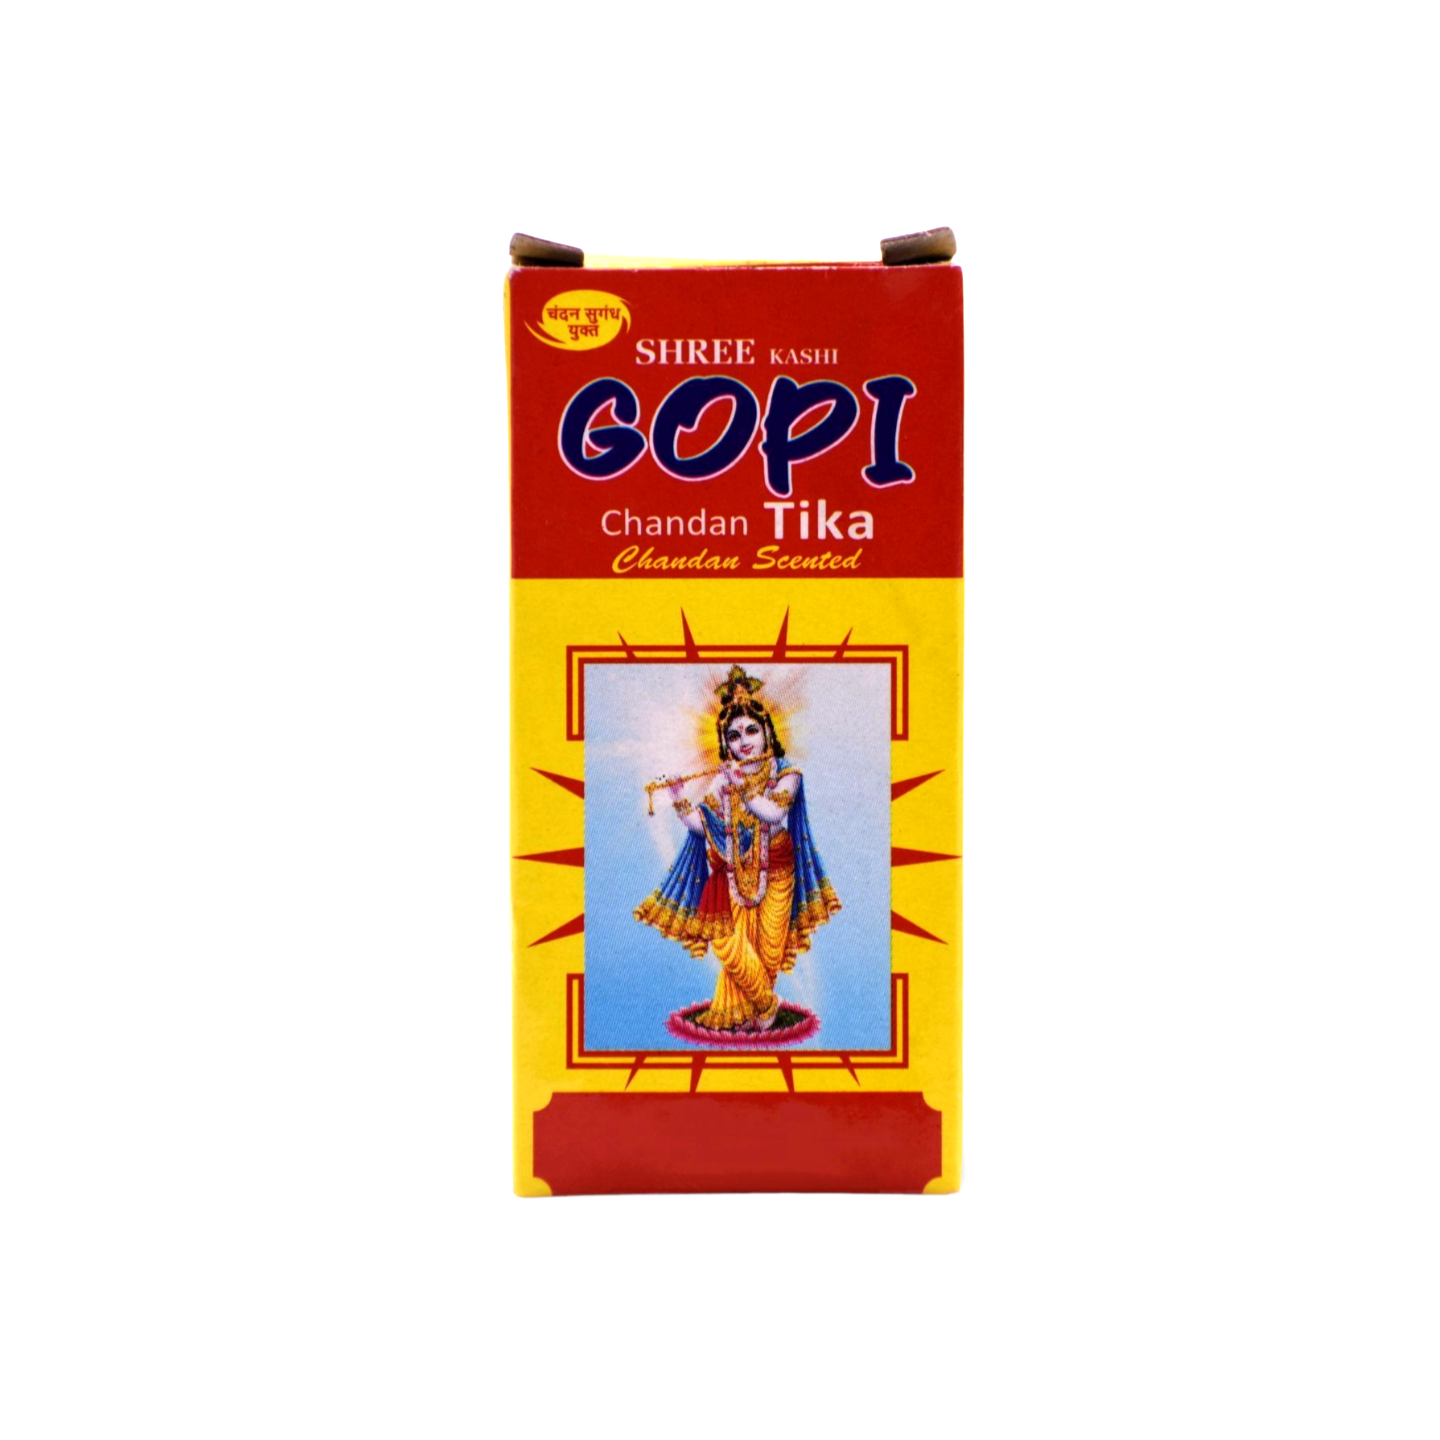 Gopi Chandan - Totally Indian